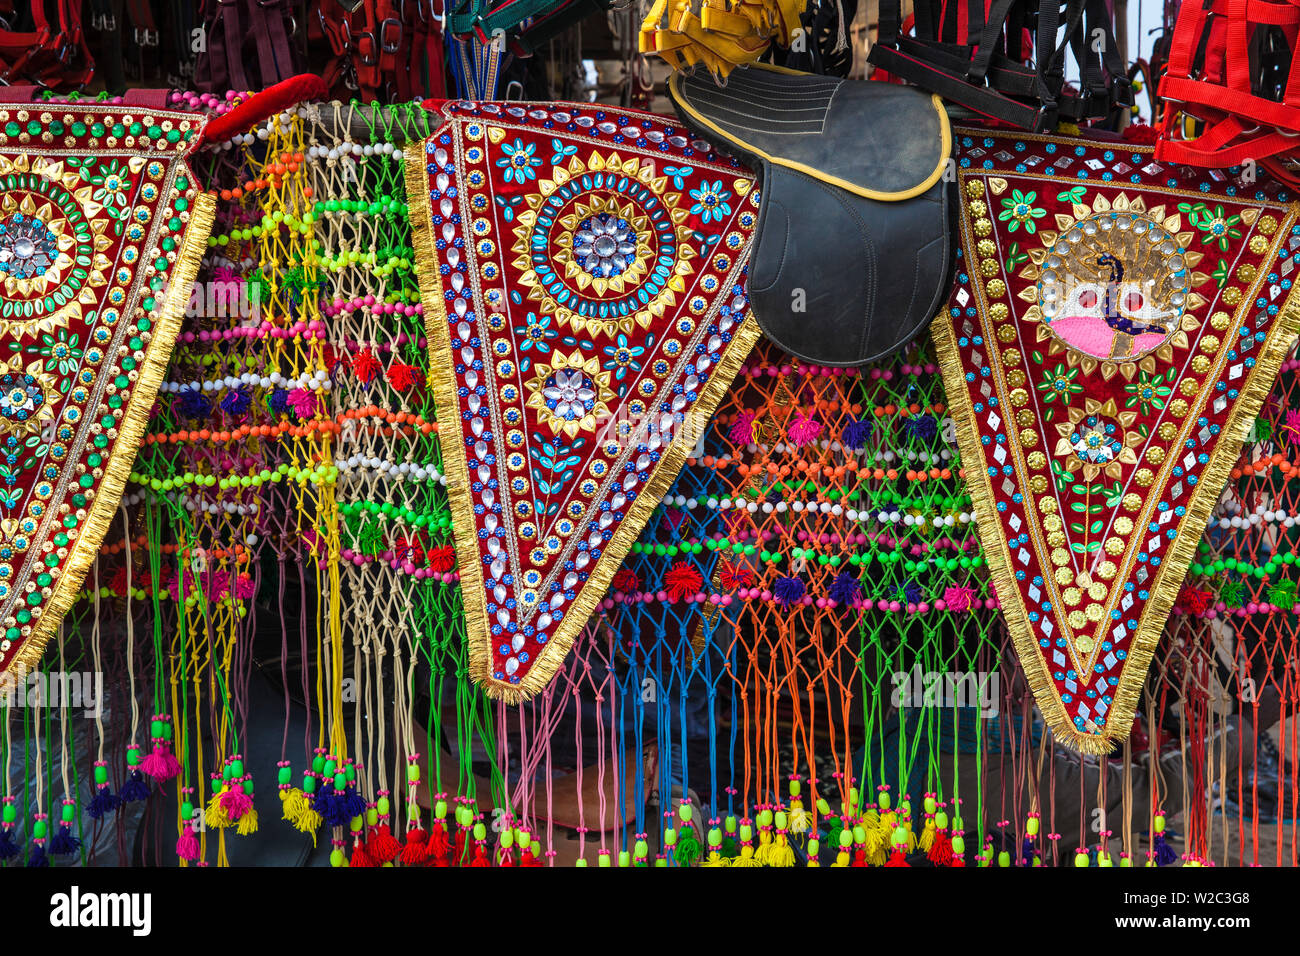 India, Rajasthan, Pushkar, Stall selling camel decorations and embellishments at Pushkar Camel Fair Stock Photo